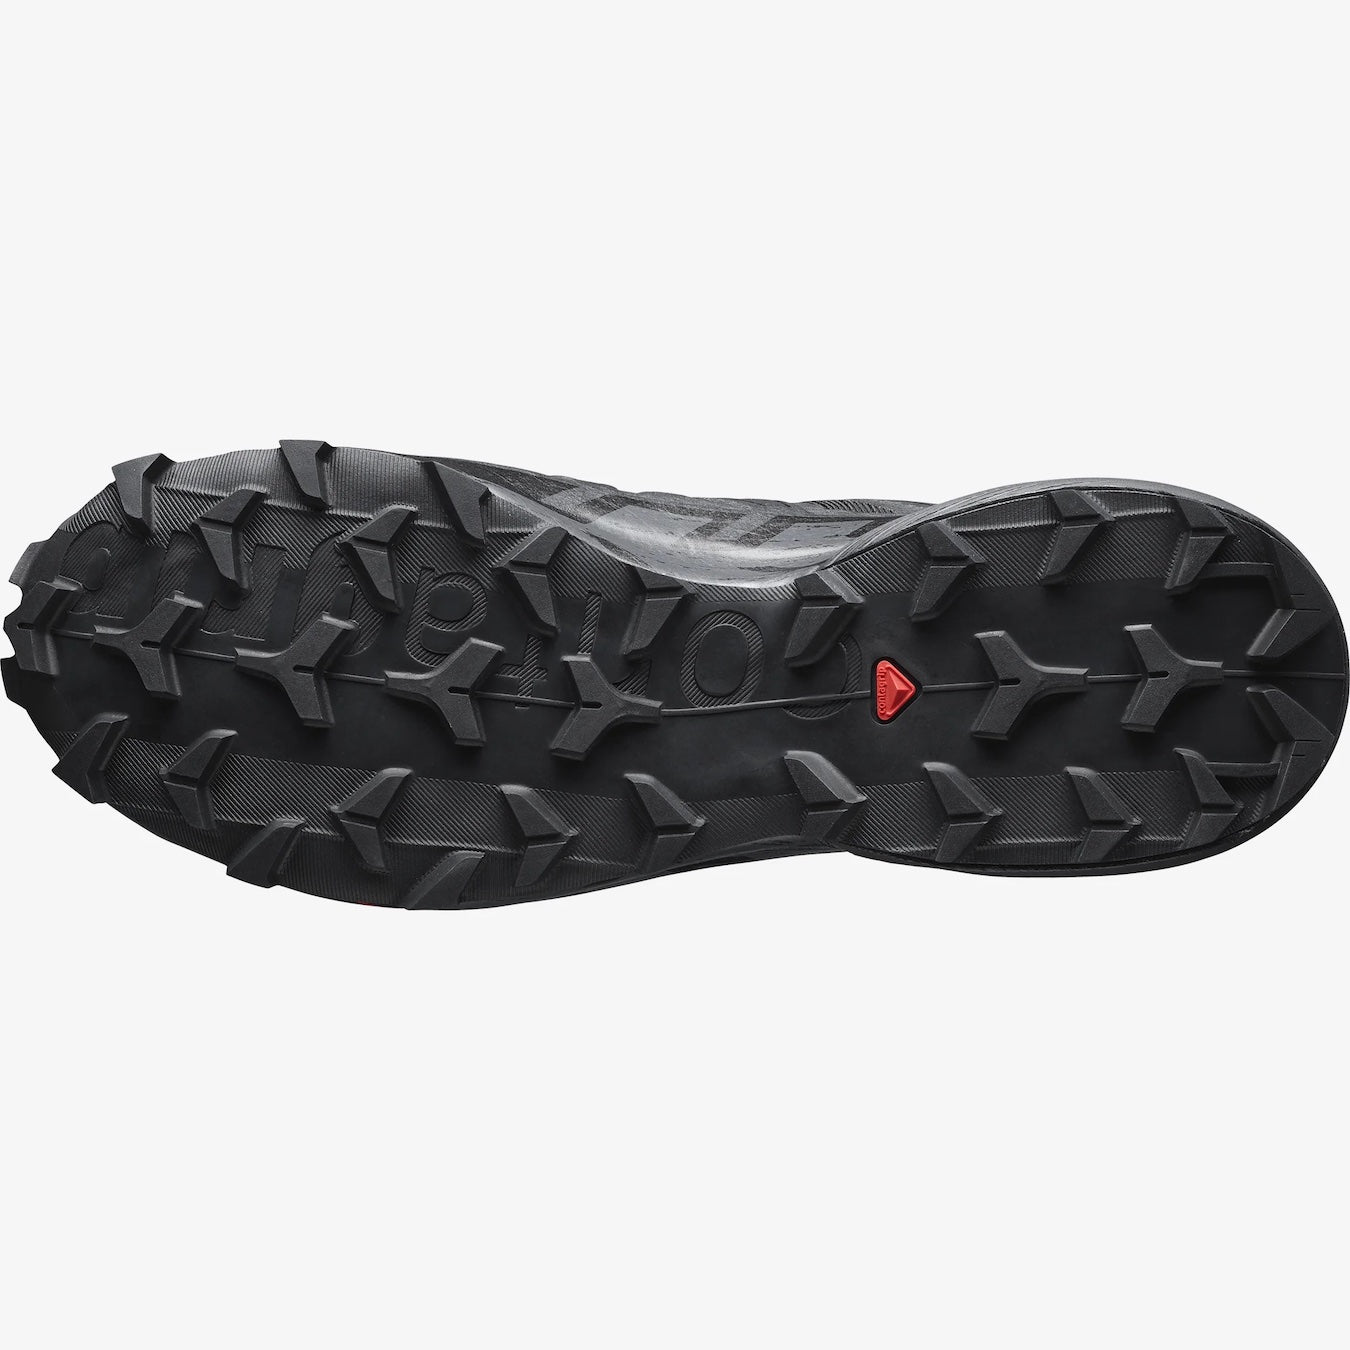 Salomon Speedcross 6 Gtx Trail Running Shoe - Men's 4